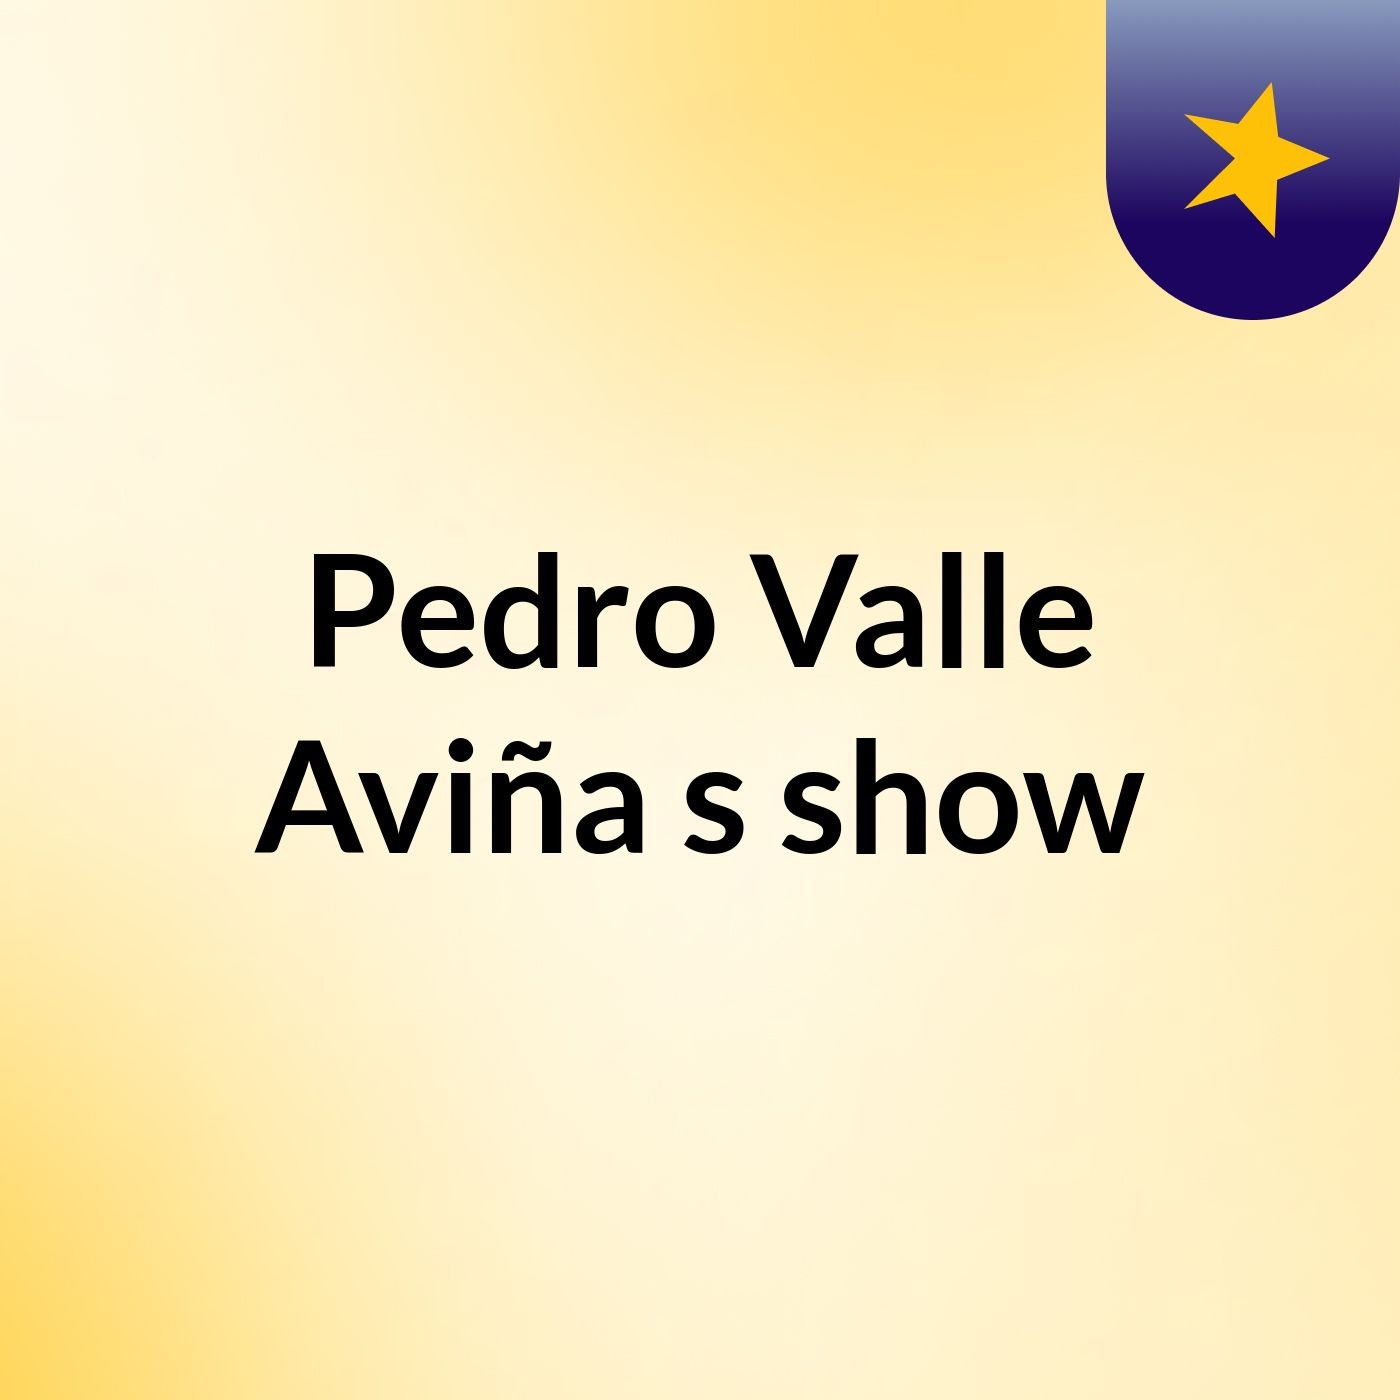 Pedro Valle Aviña's show